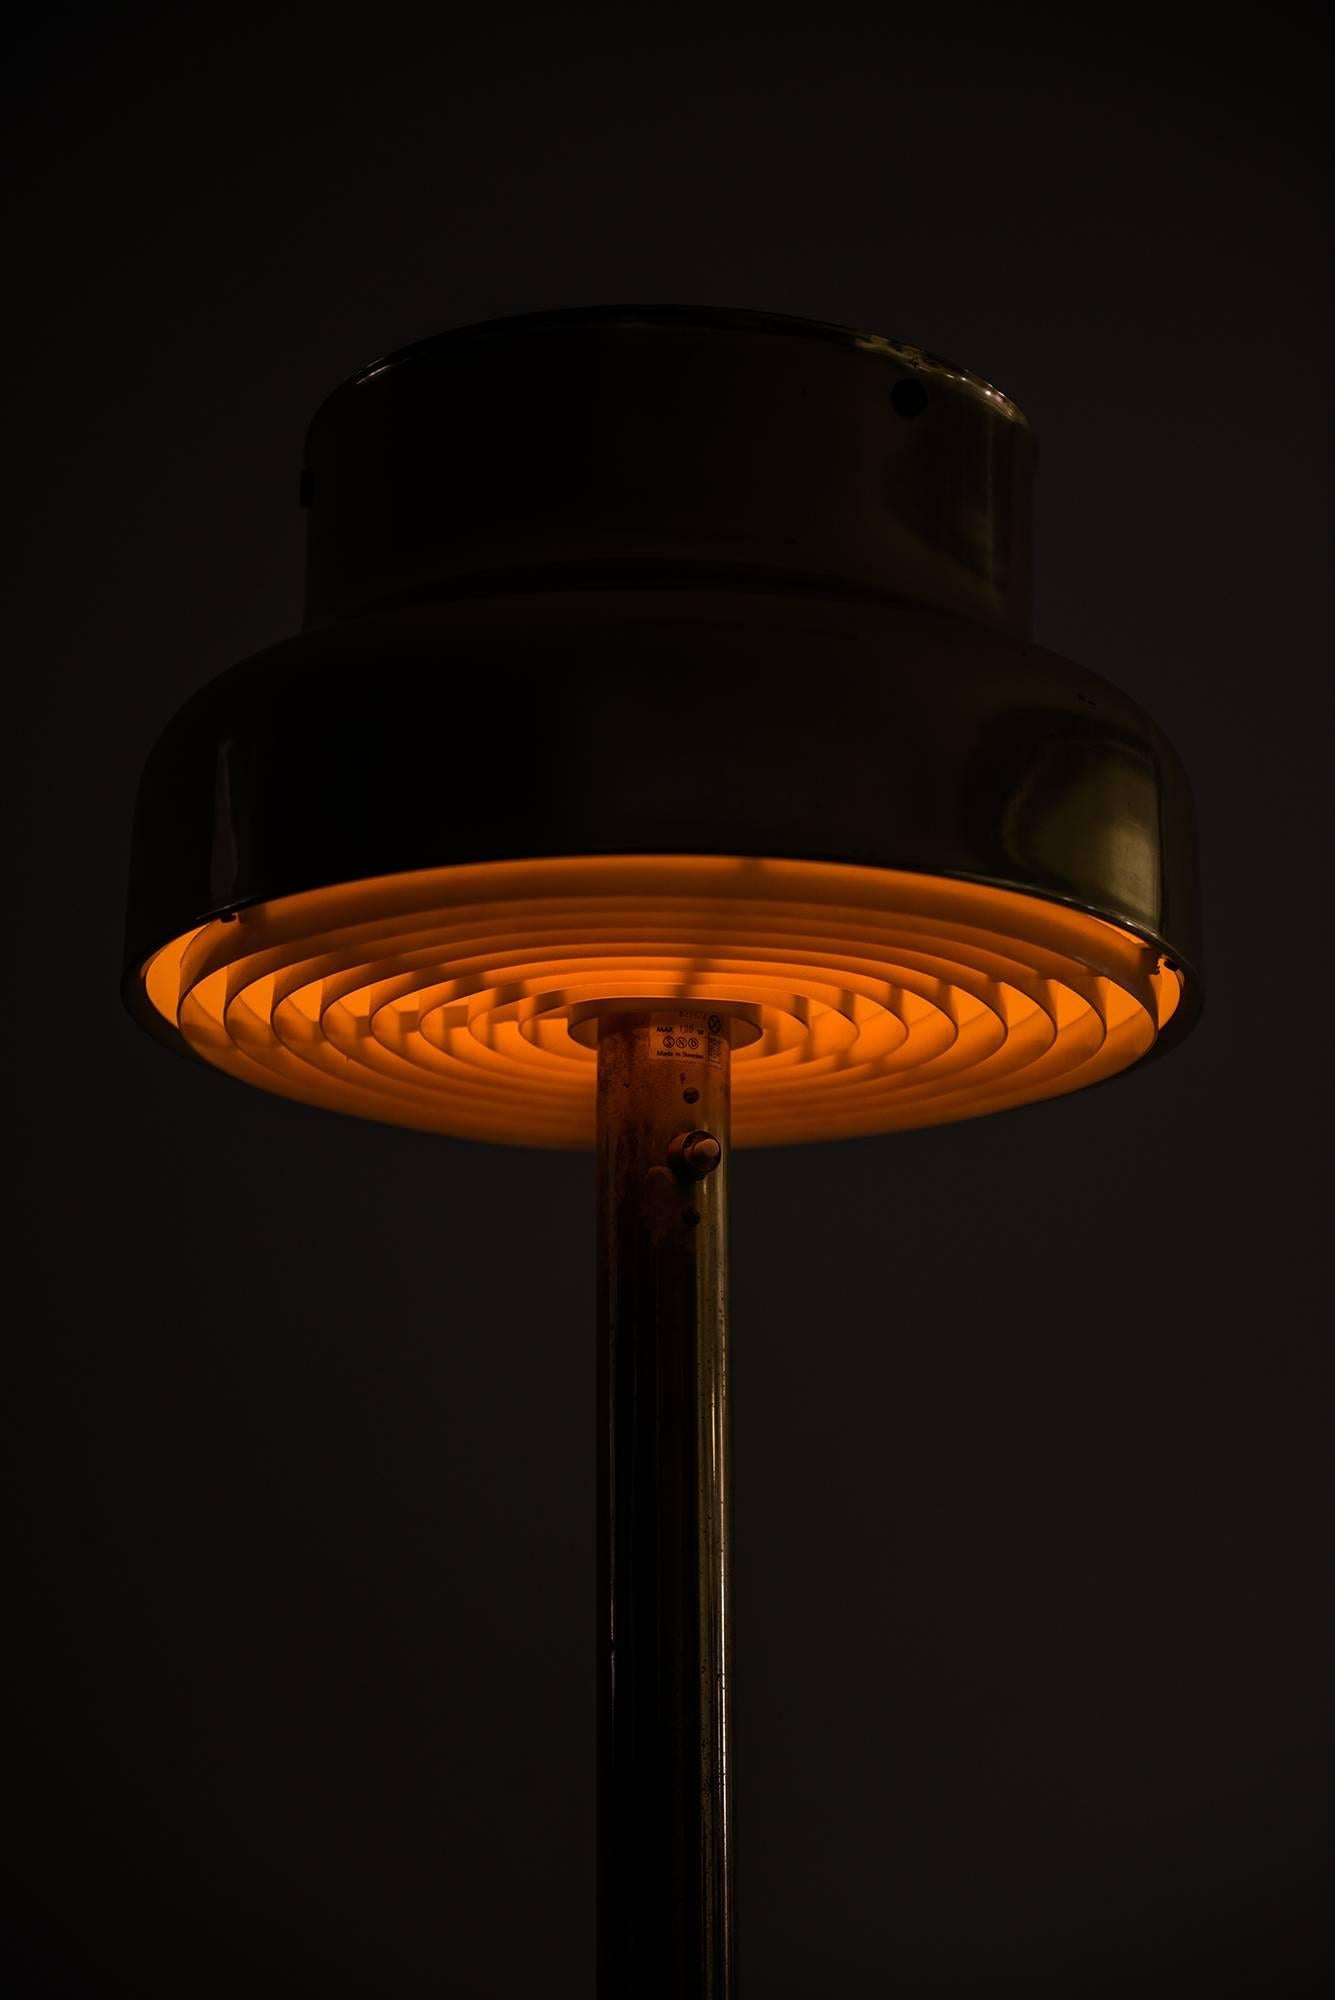 Brass Anders Pehrson Floor Lamp Model Bumling by Ateljé Lyktan in Sweden